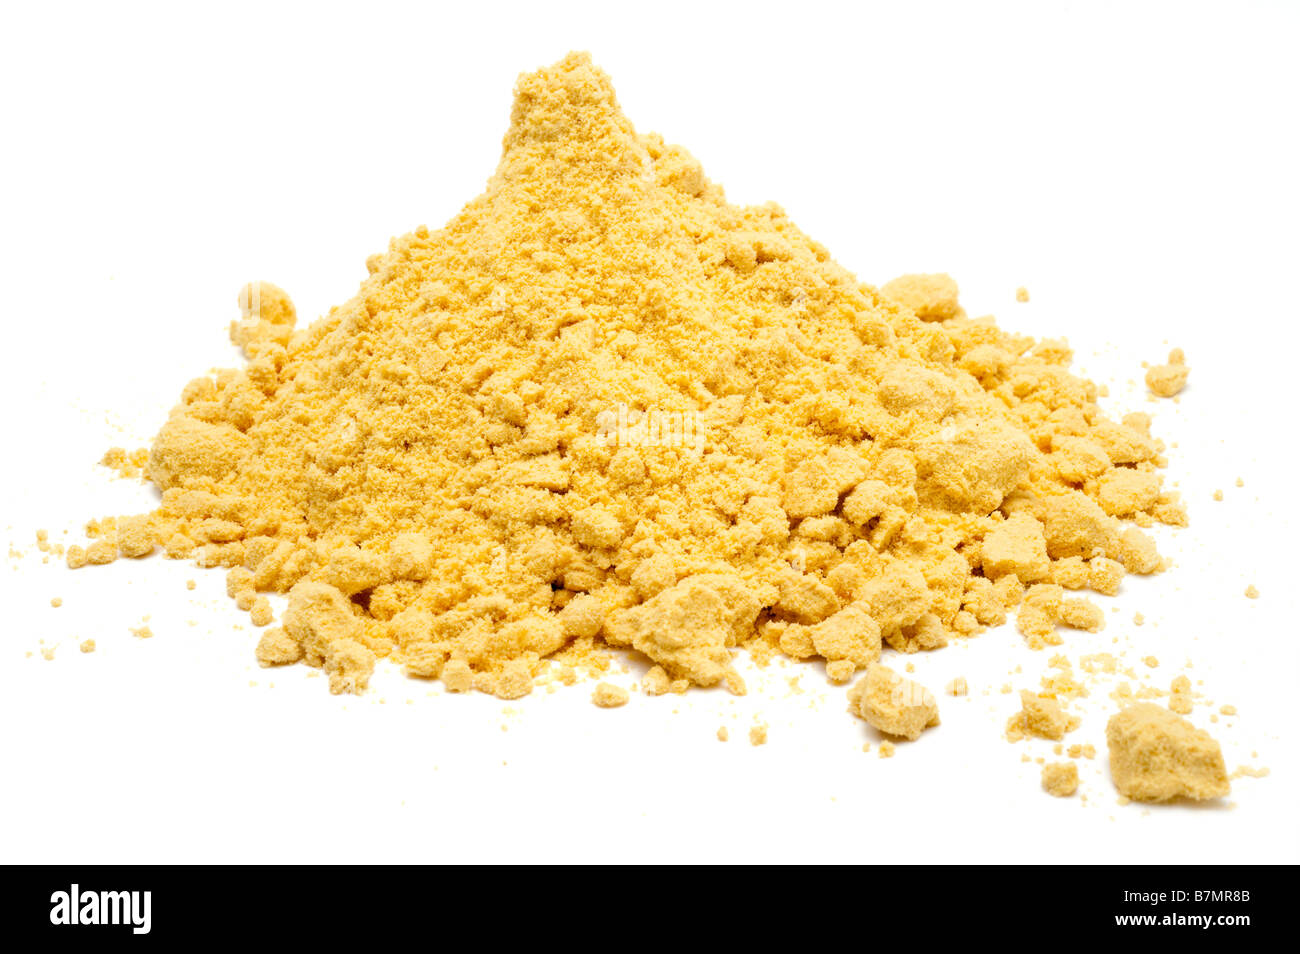 Pile of unmixed powdered mustard Stock Photo